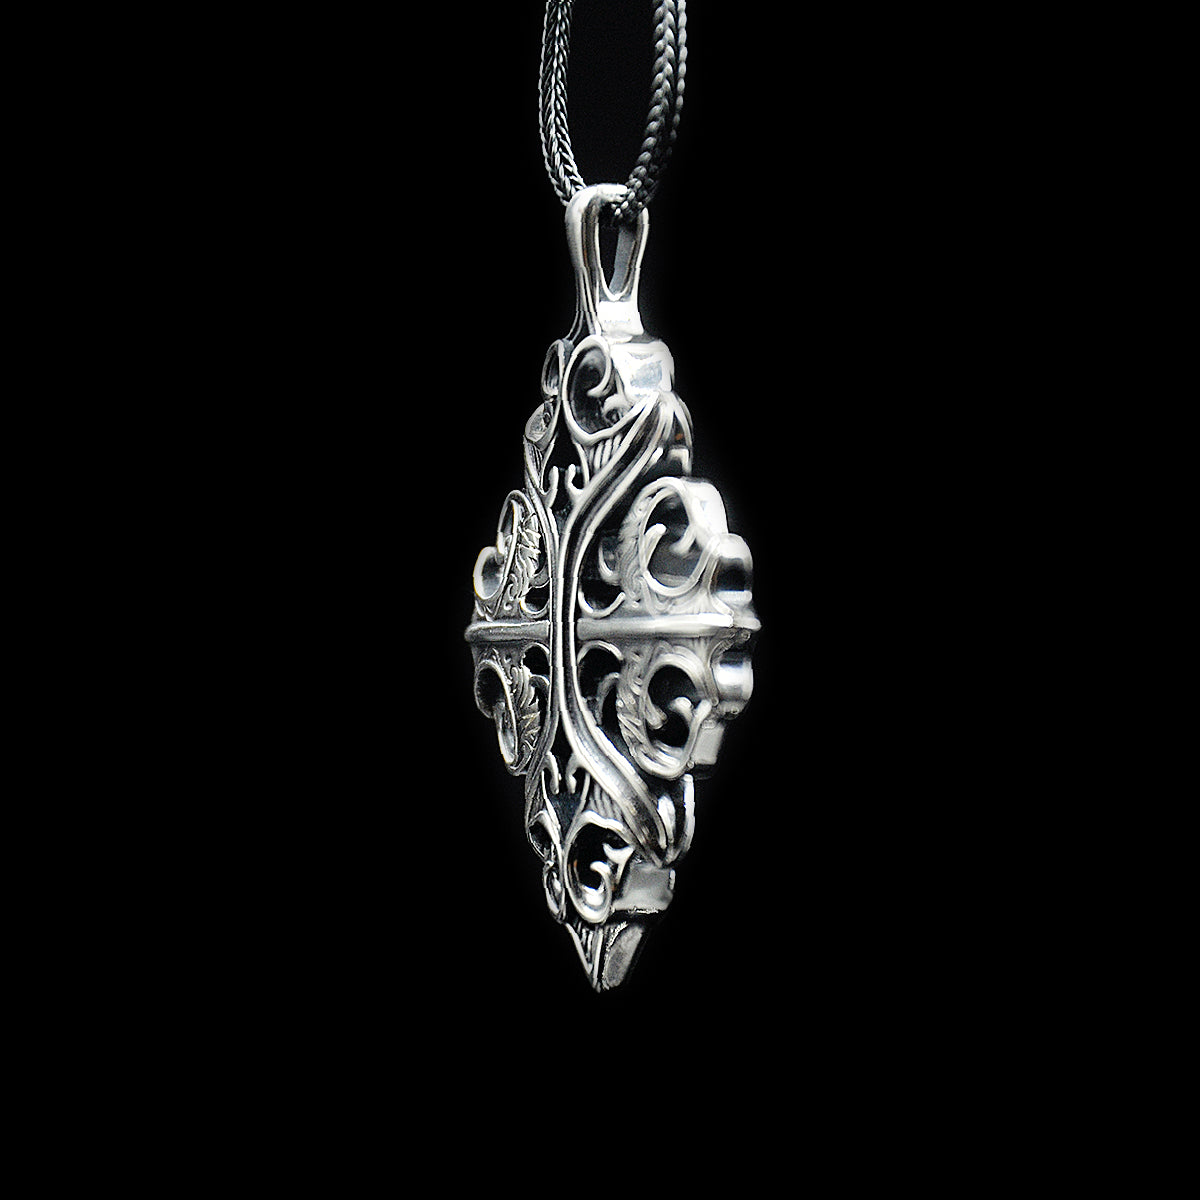 DYQ JEWELRY 925 Silver Kabala Pendant Men's Necklace